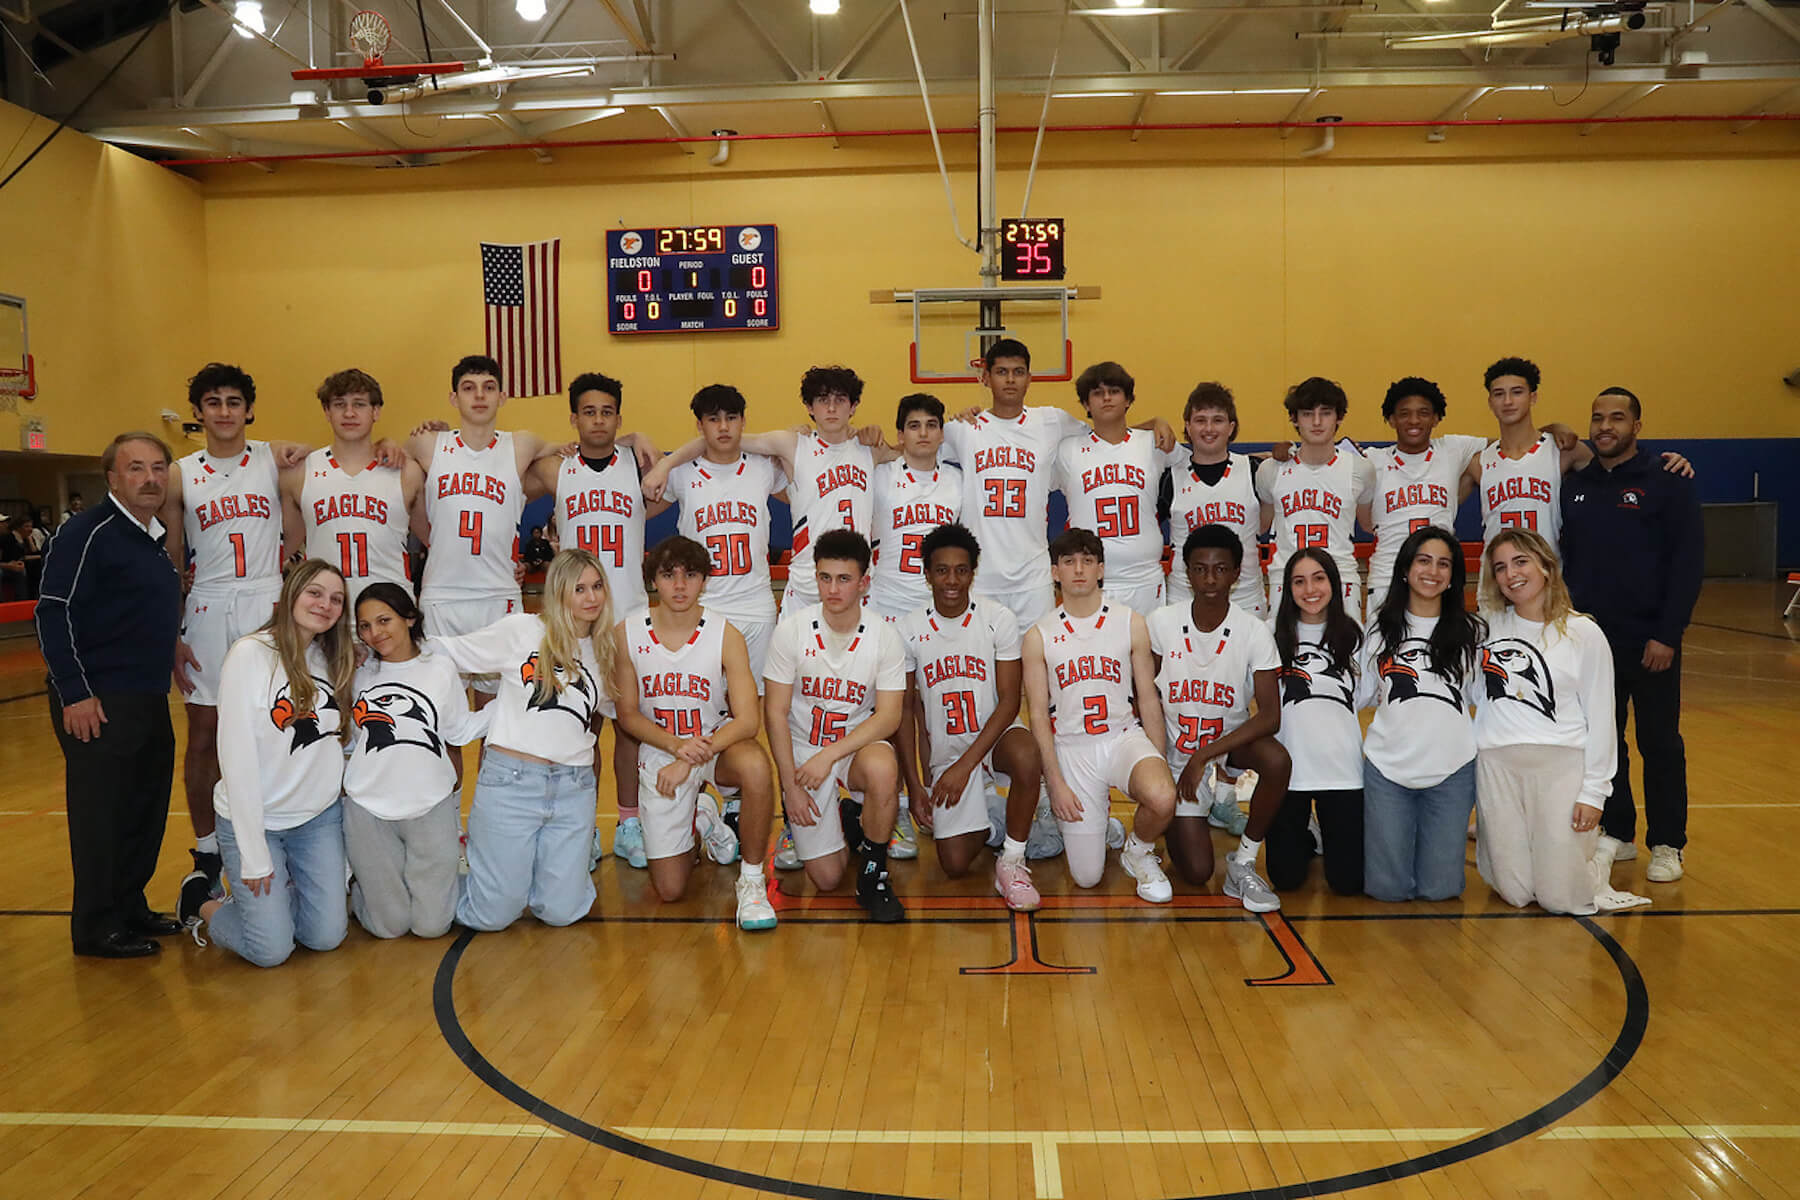 Fieldston Upper boys varsity basketball team poses for group photo in varsity gym.